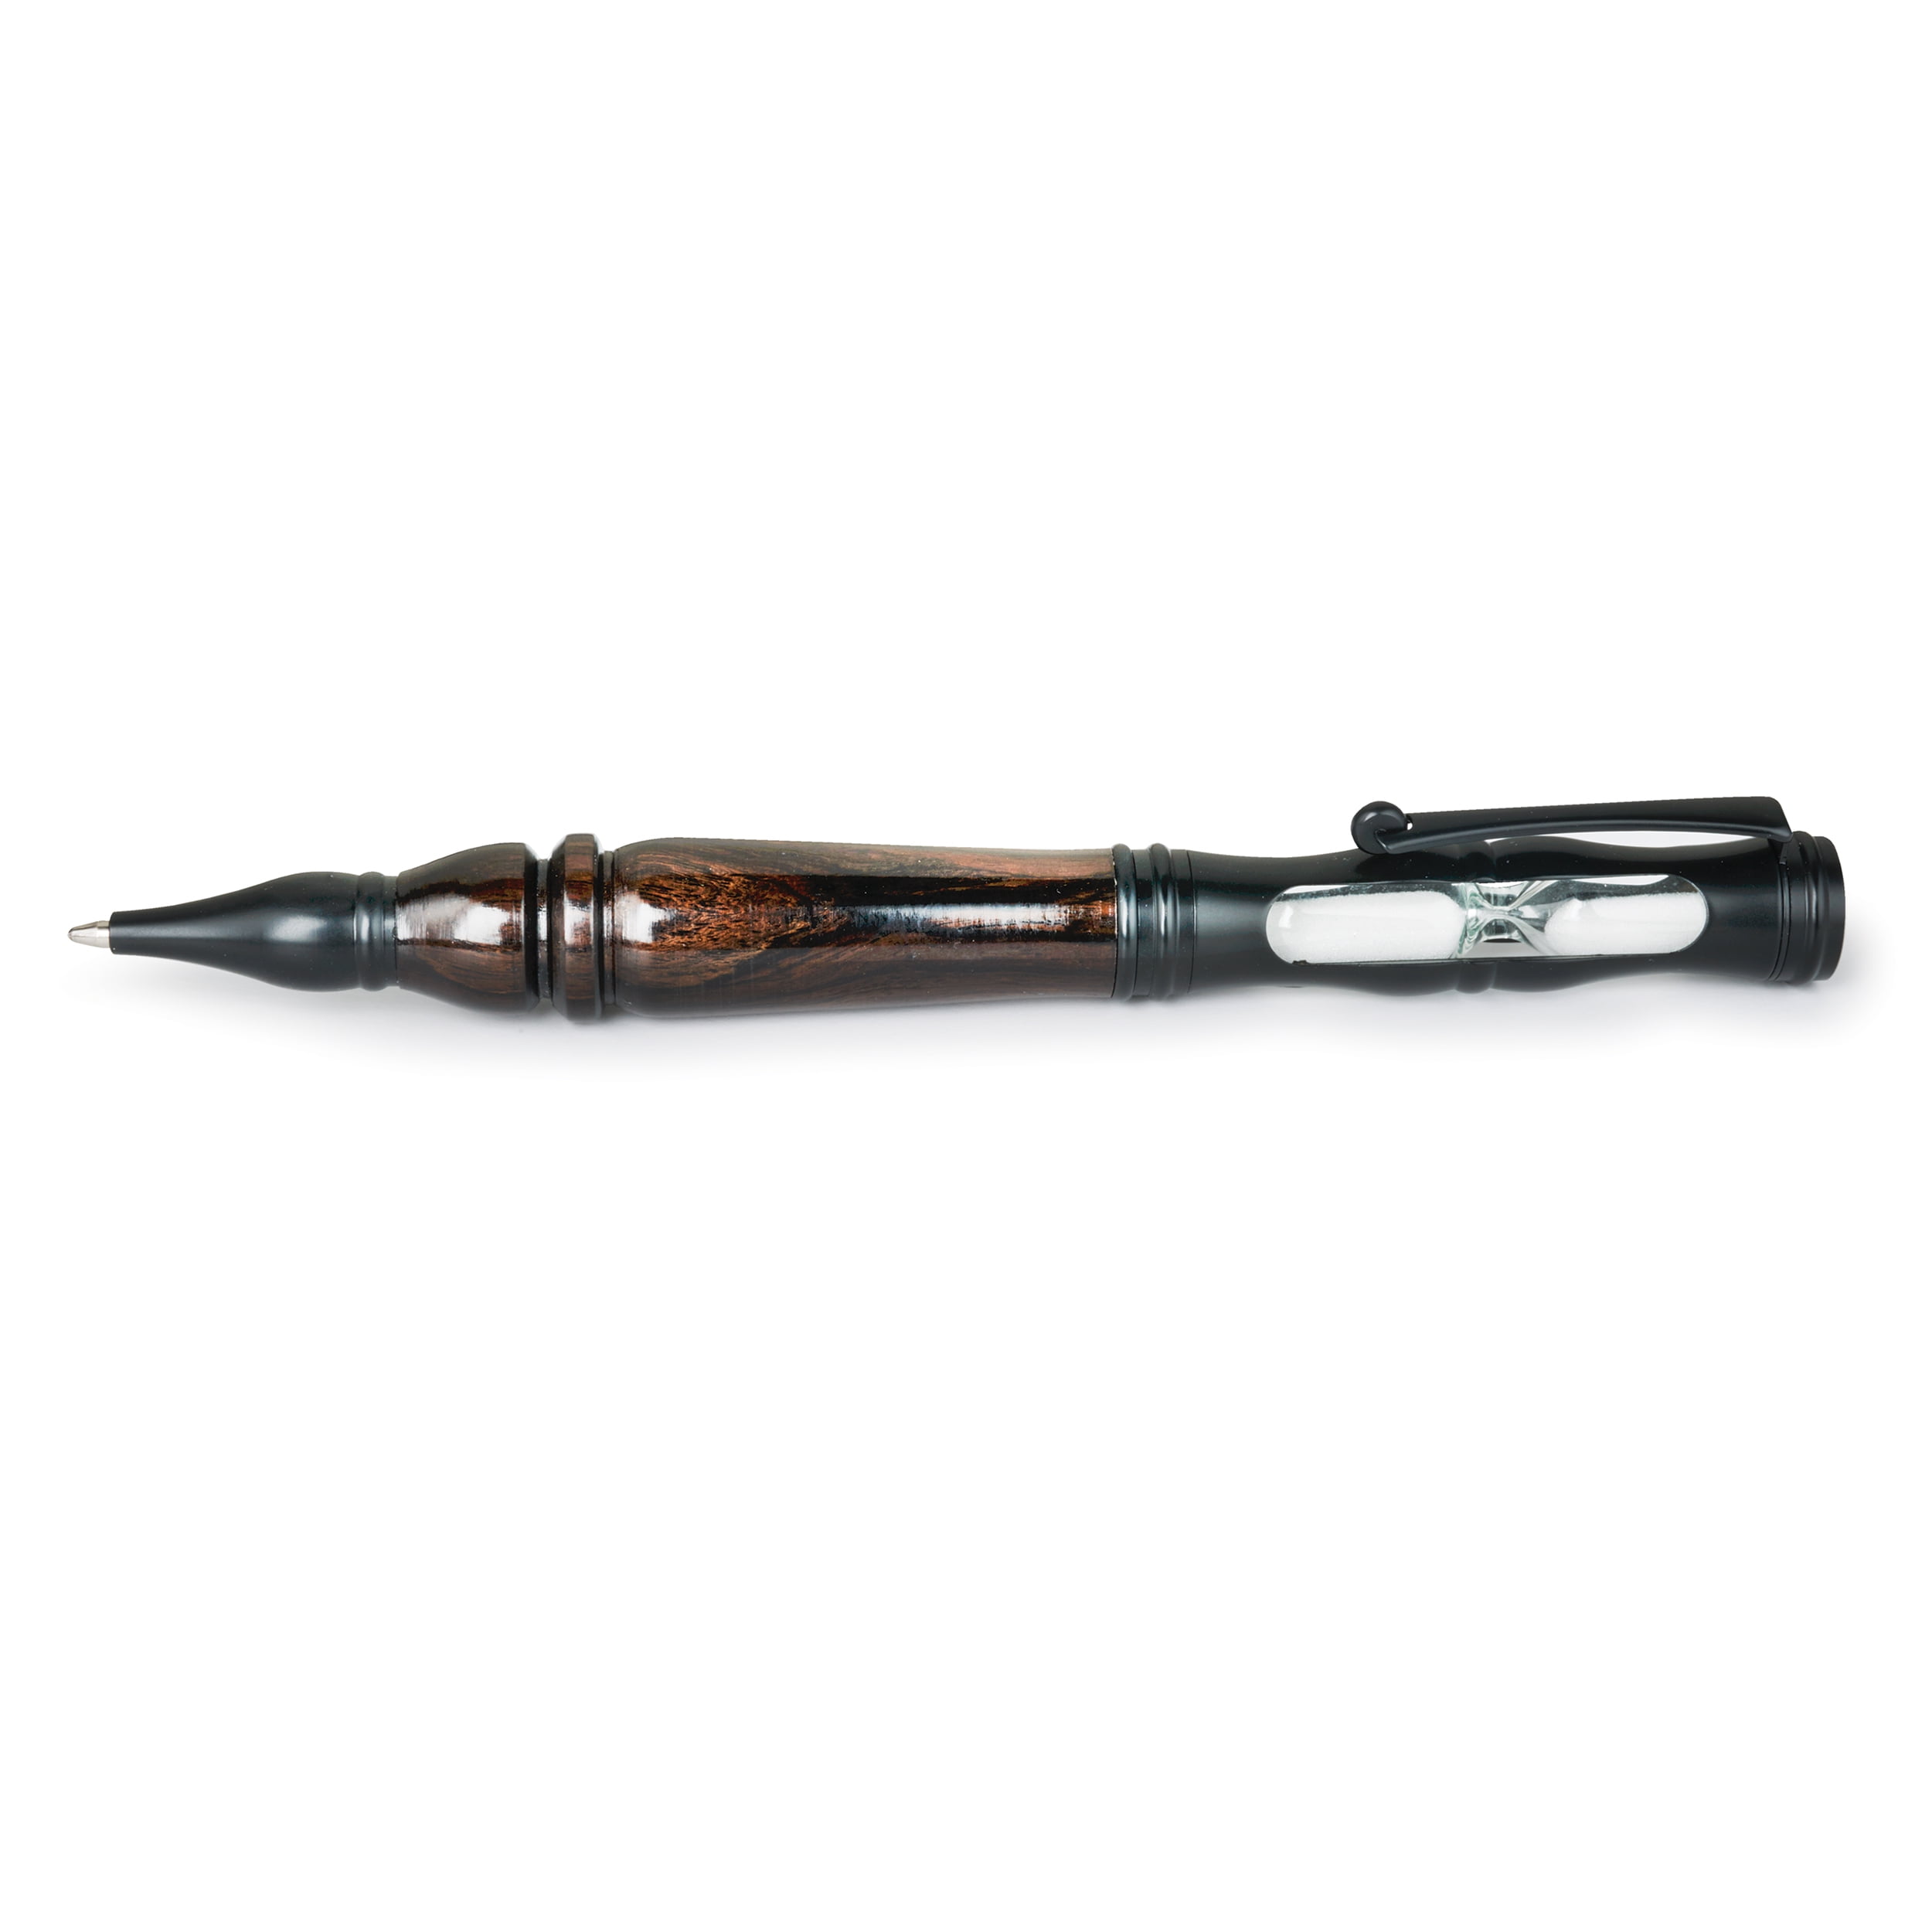 Apprentice Pen Turning Essentials Kit, Pen Making